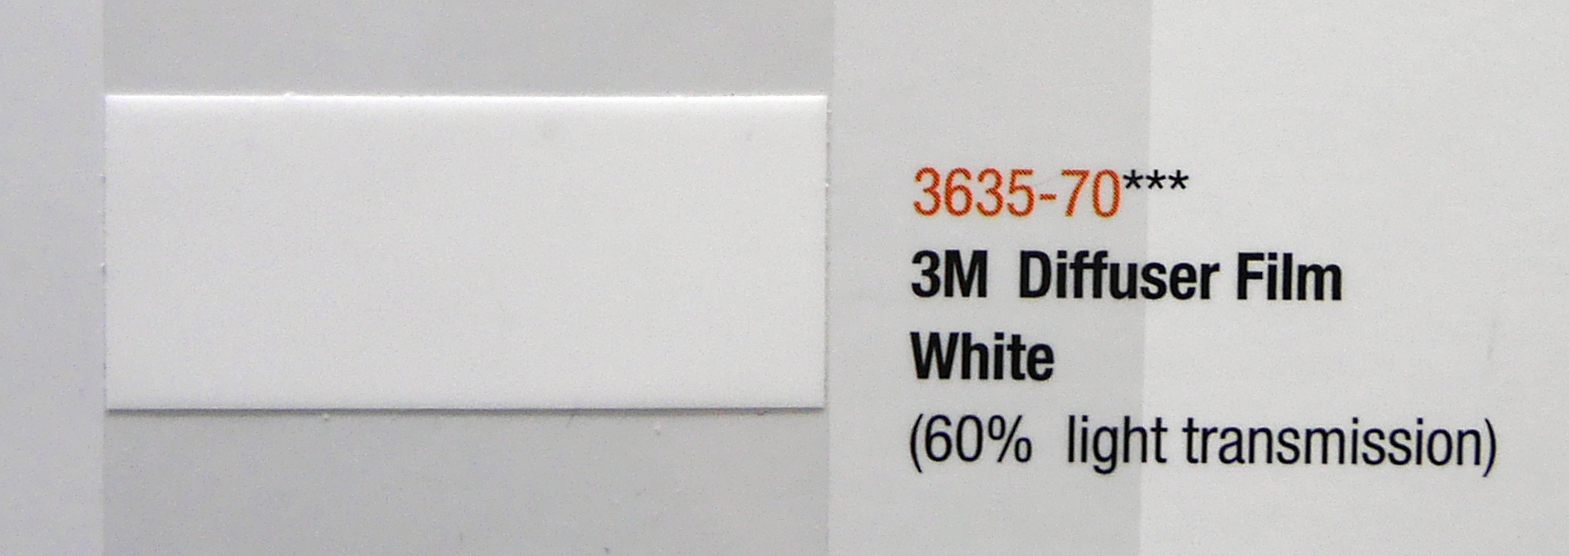 363570 3M Diffuser Film White Tanabutr